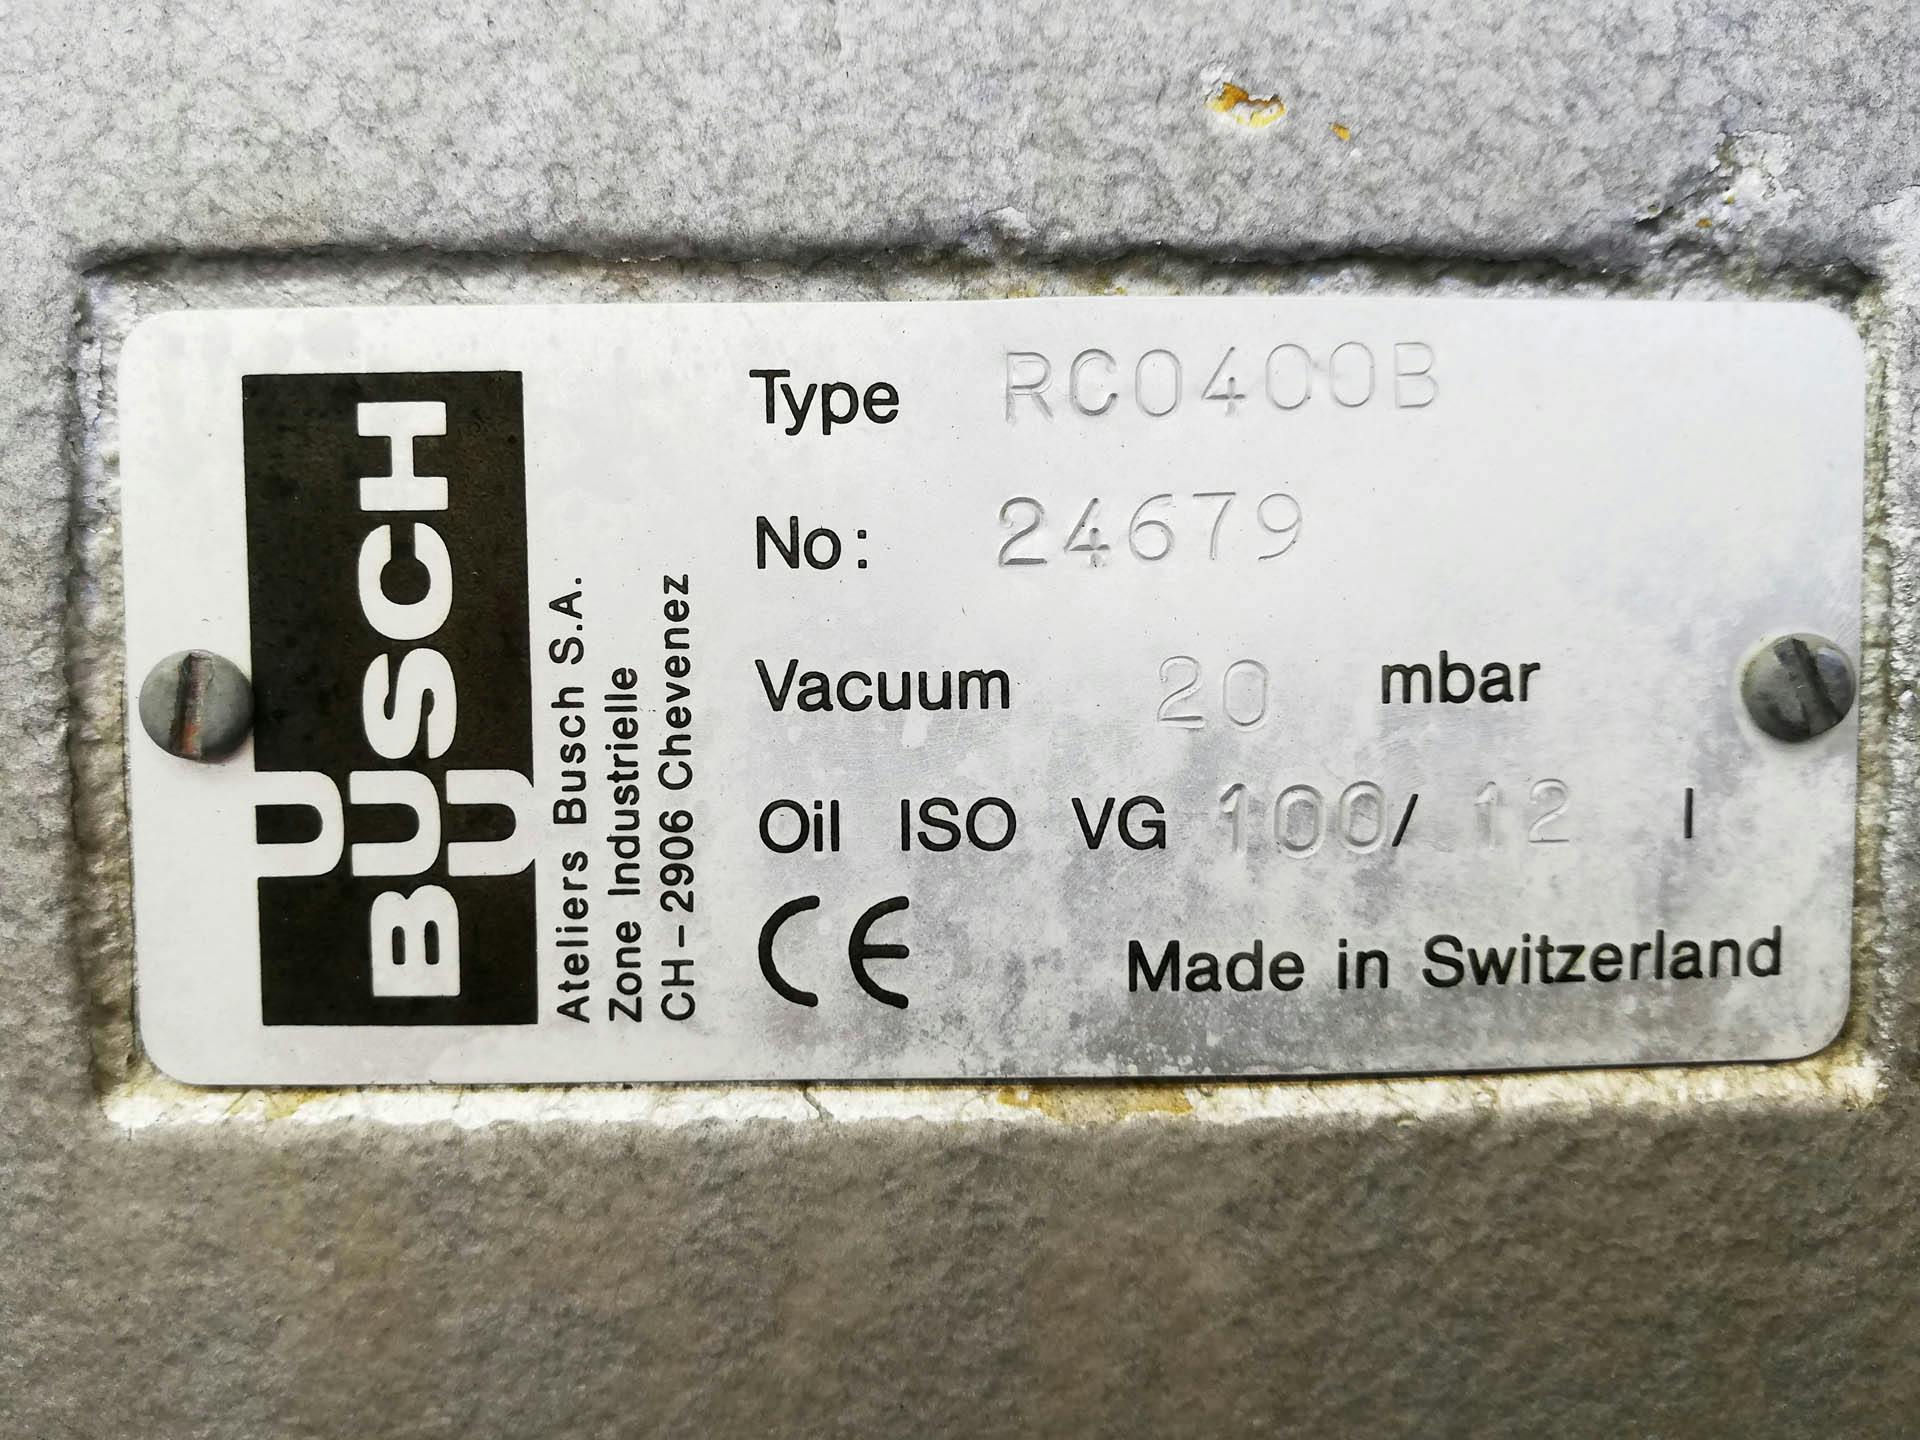 Busch RC0400B - Vacuumpomp - image 5